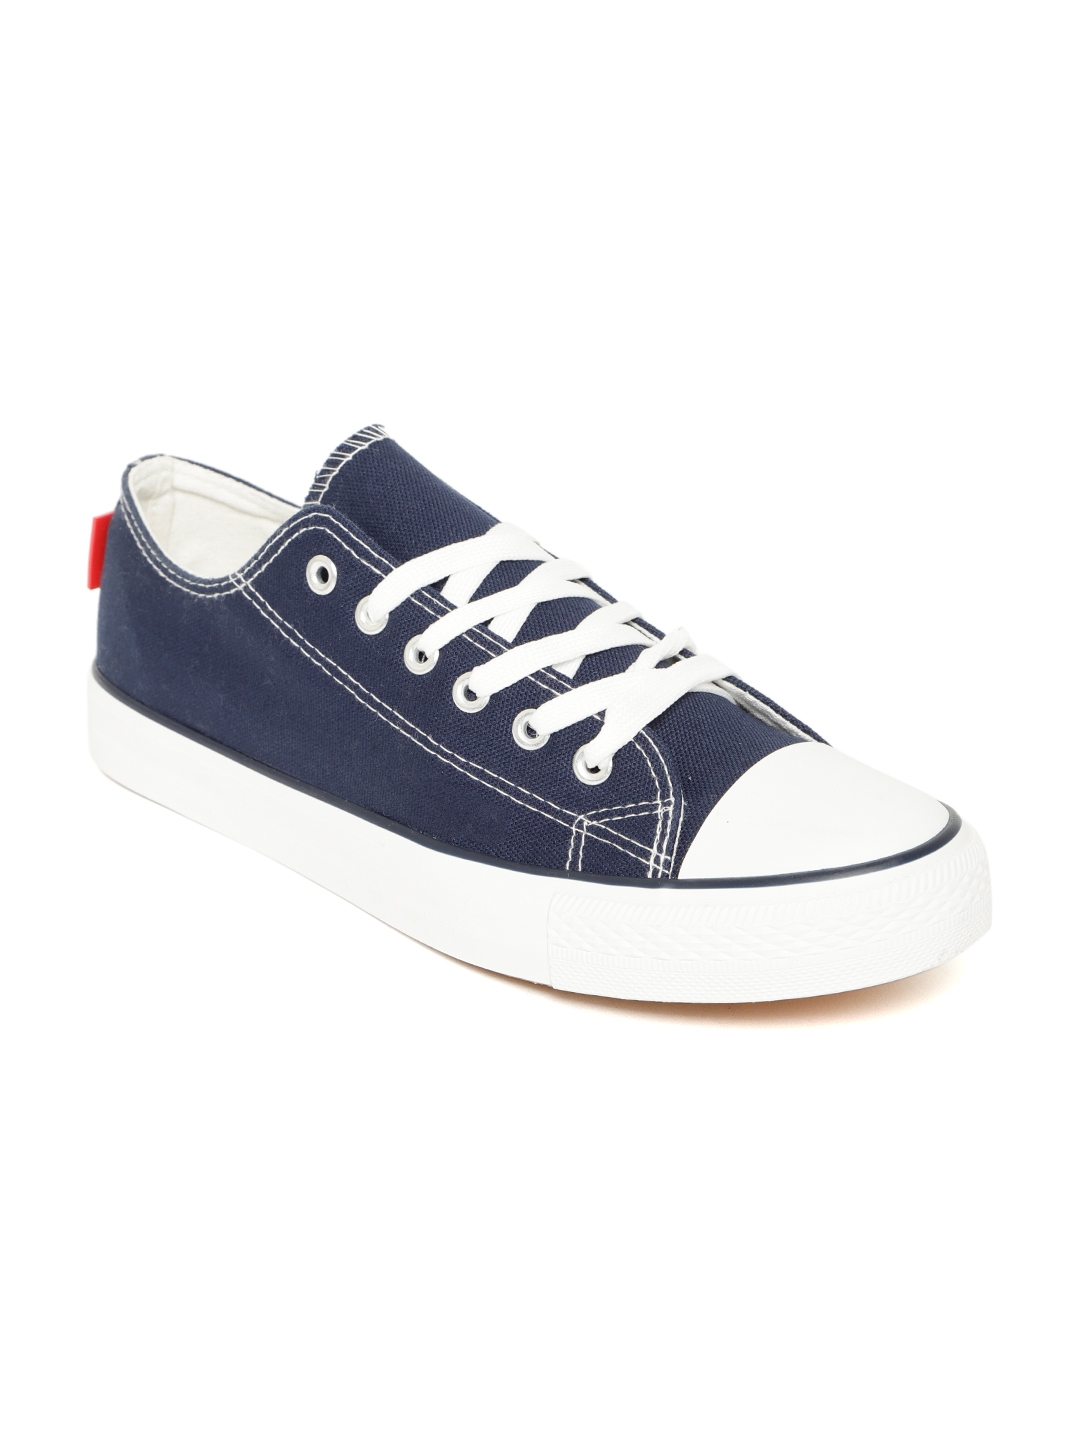 Buy Harvard Men Navy Blue Sneakers - Casual Shoes for Men 8086835 | Myntra